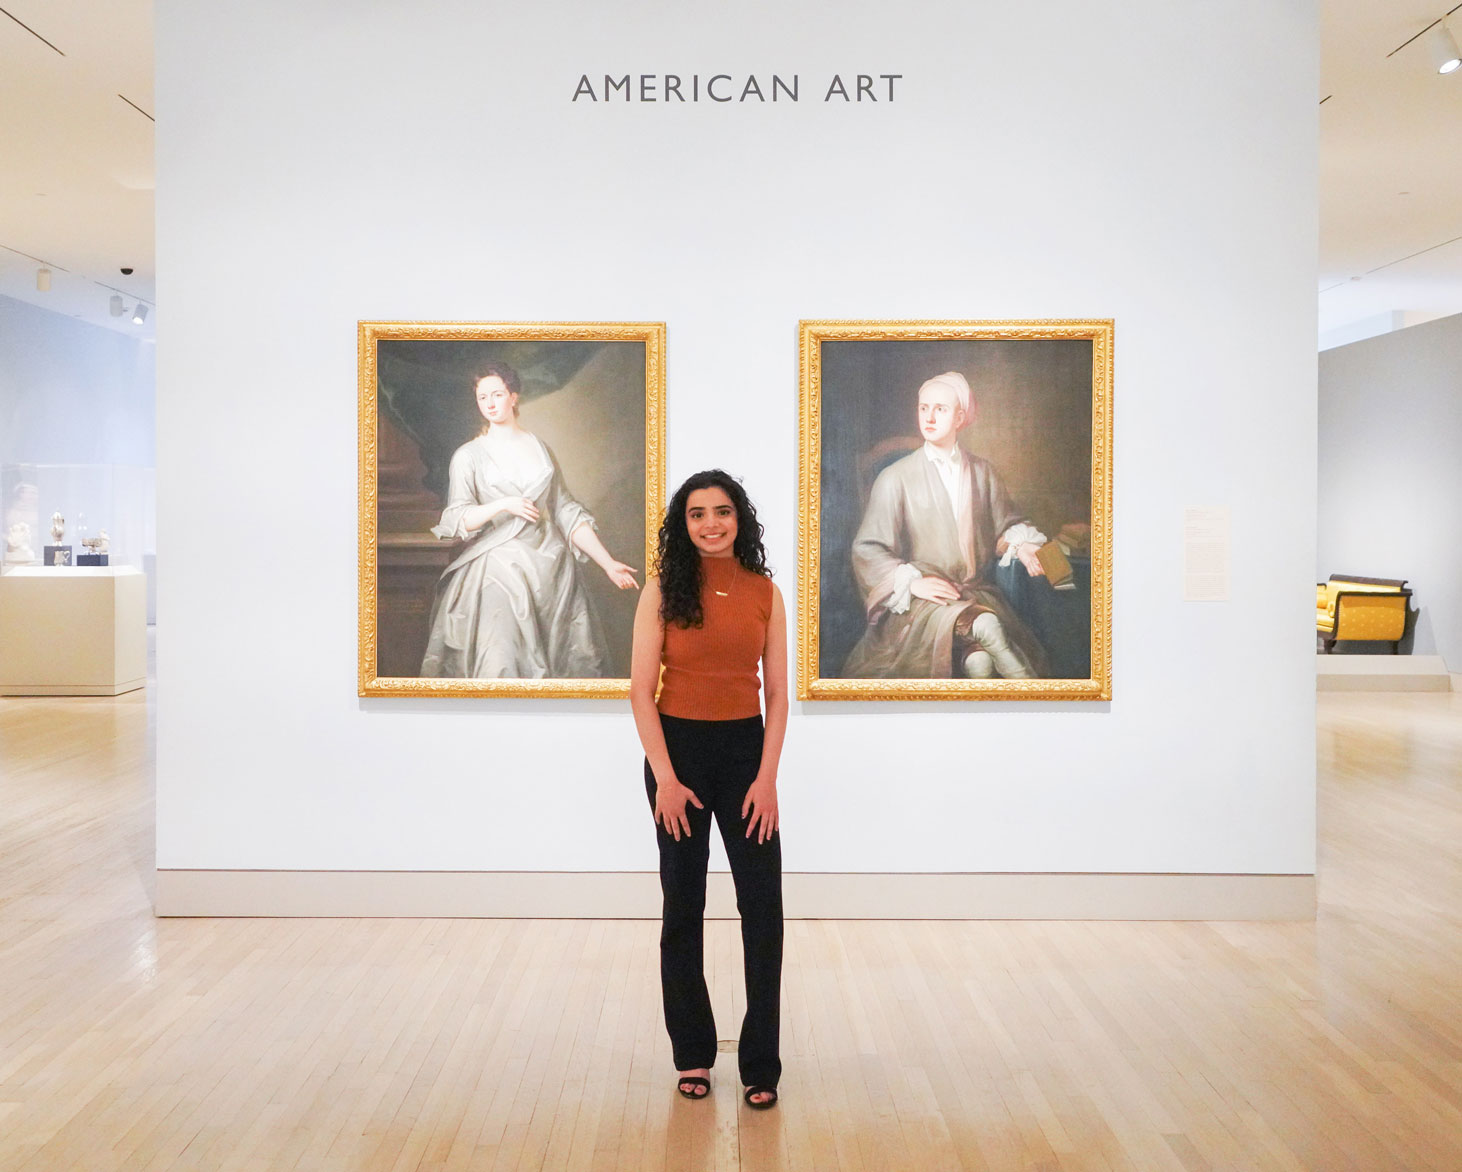 Art history student Swarangi Potdar was selected for an internship at the Dallas Museum of Art.